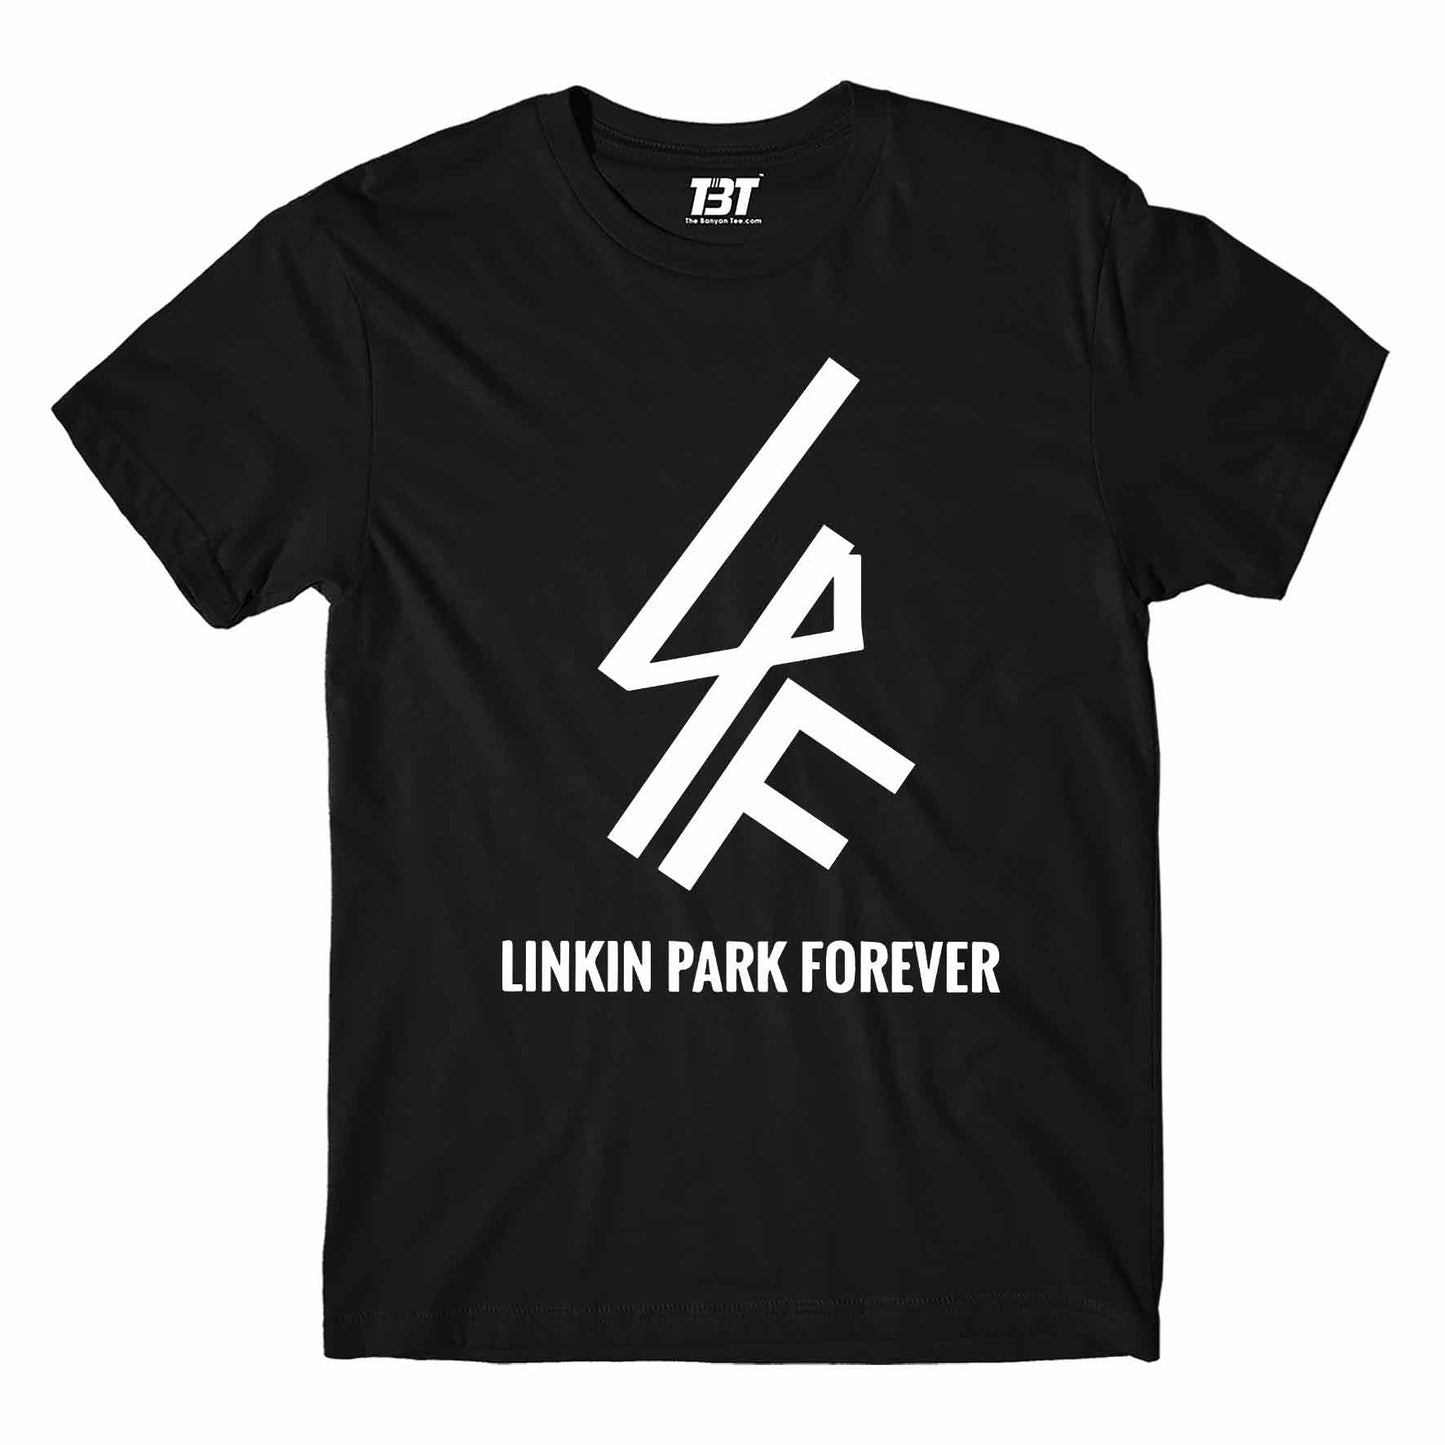 linkin park forever t-shirt music band buy online usa united states the banyan tee tbt men women girls boys unisex black